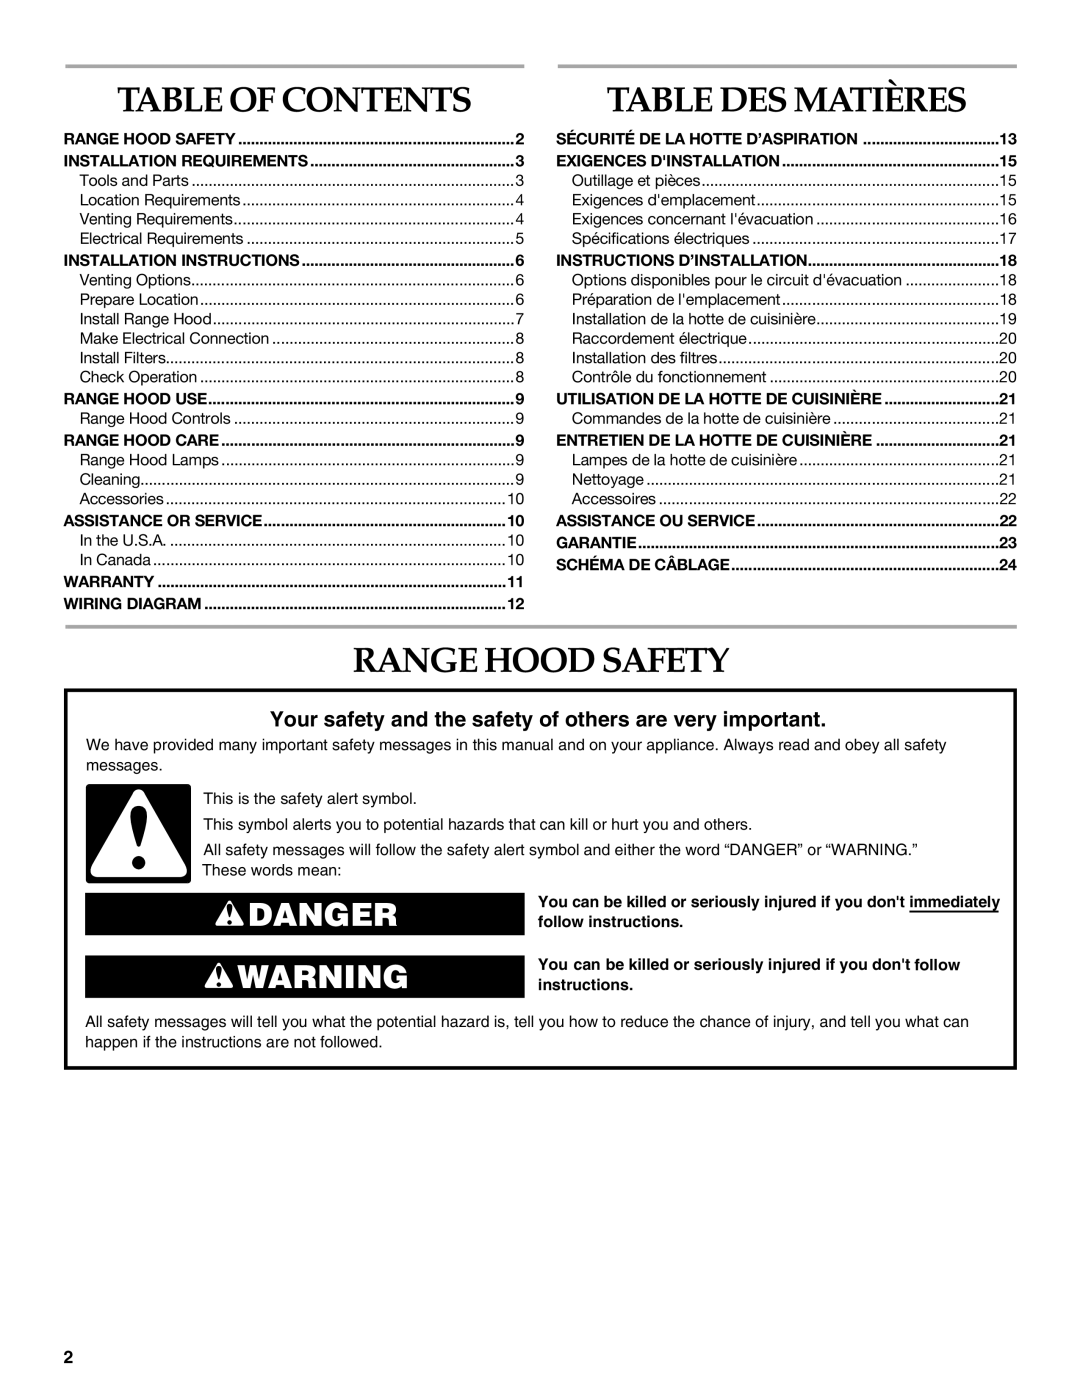 KitchenAid RangeHood installation instructions Table of Contents Table DES Matières, Range Hood Safety 